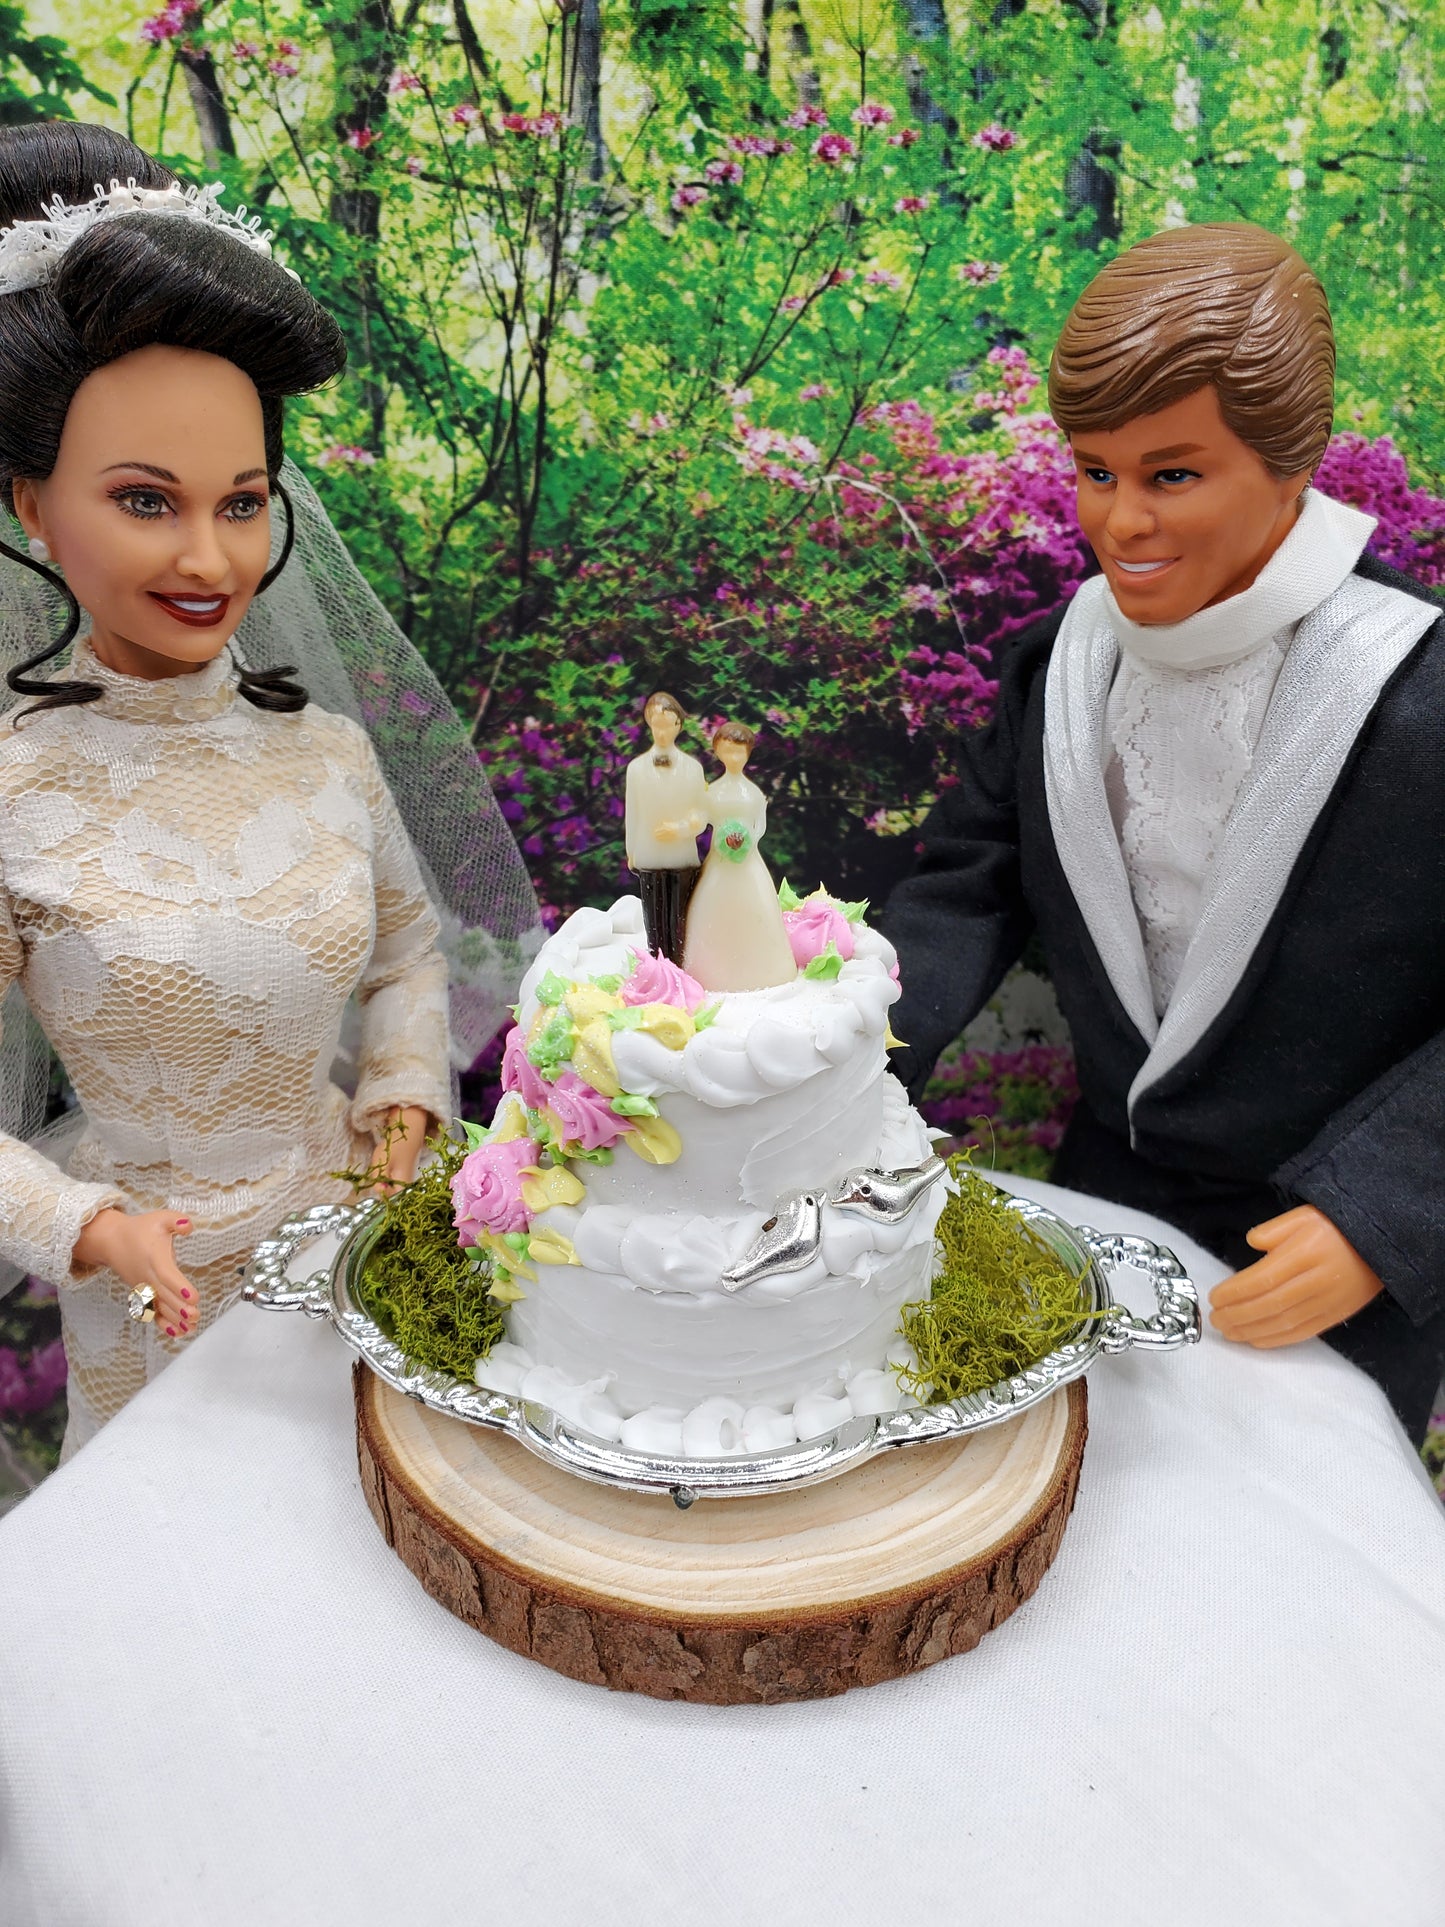 Wedding Cakes for Fashion Dolls